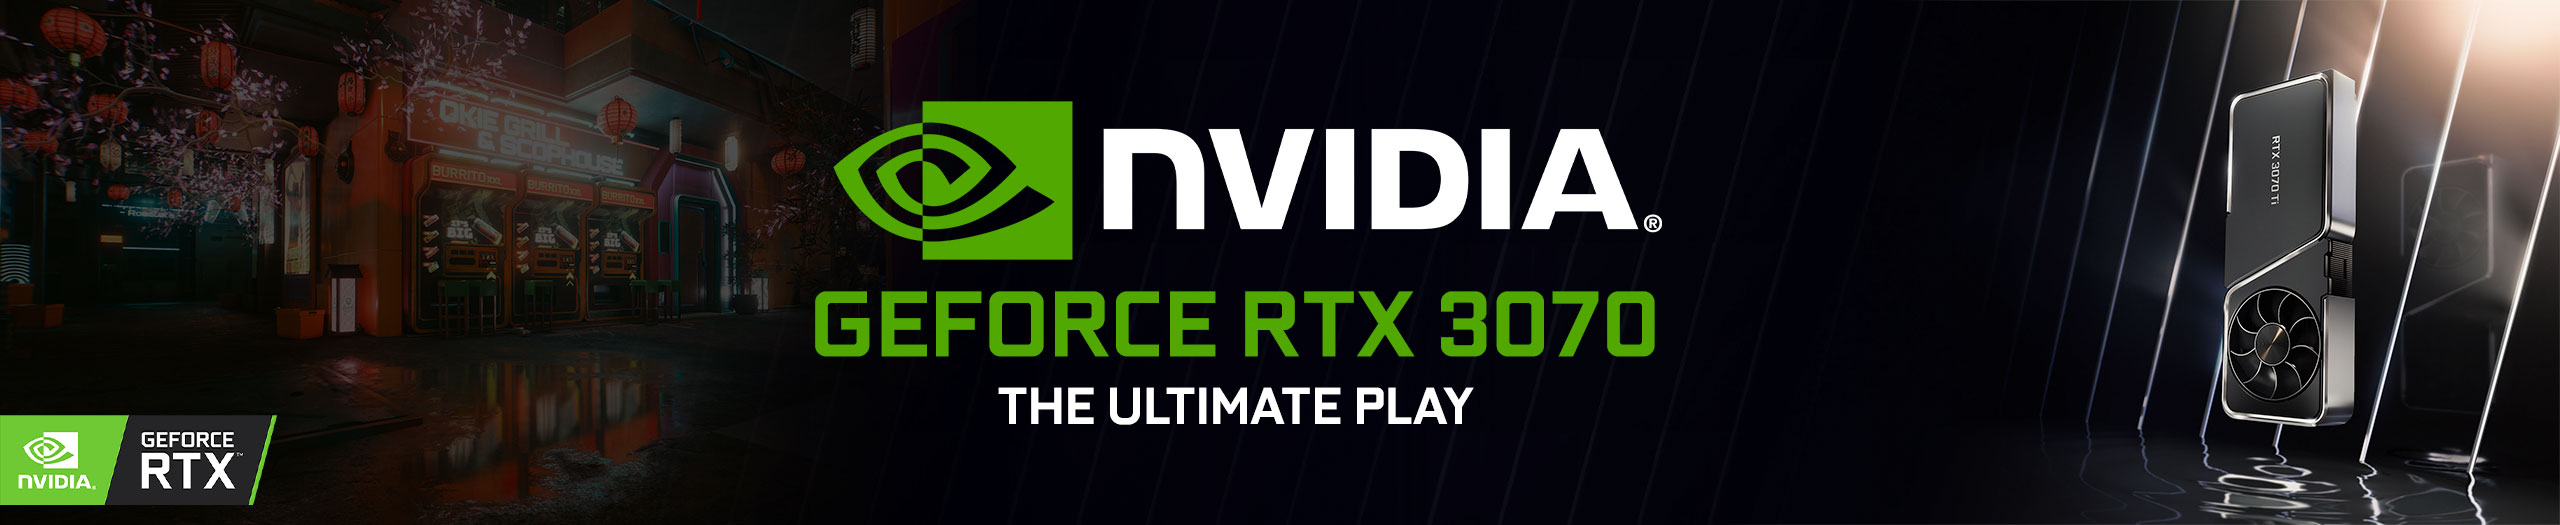 Geforce RTX 3070 Landing Page
